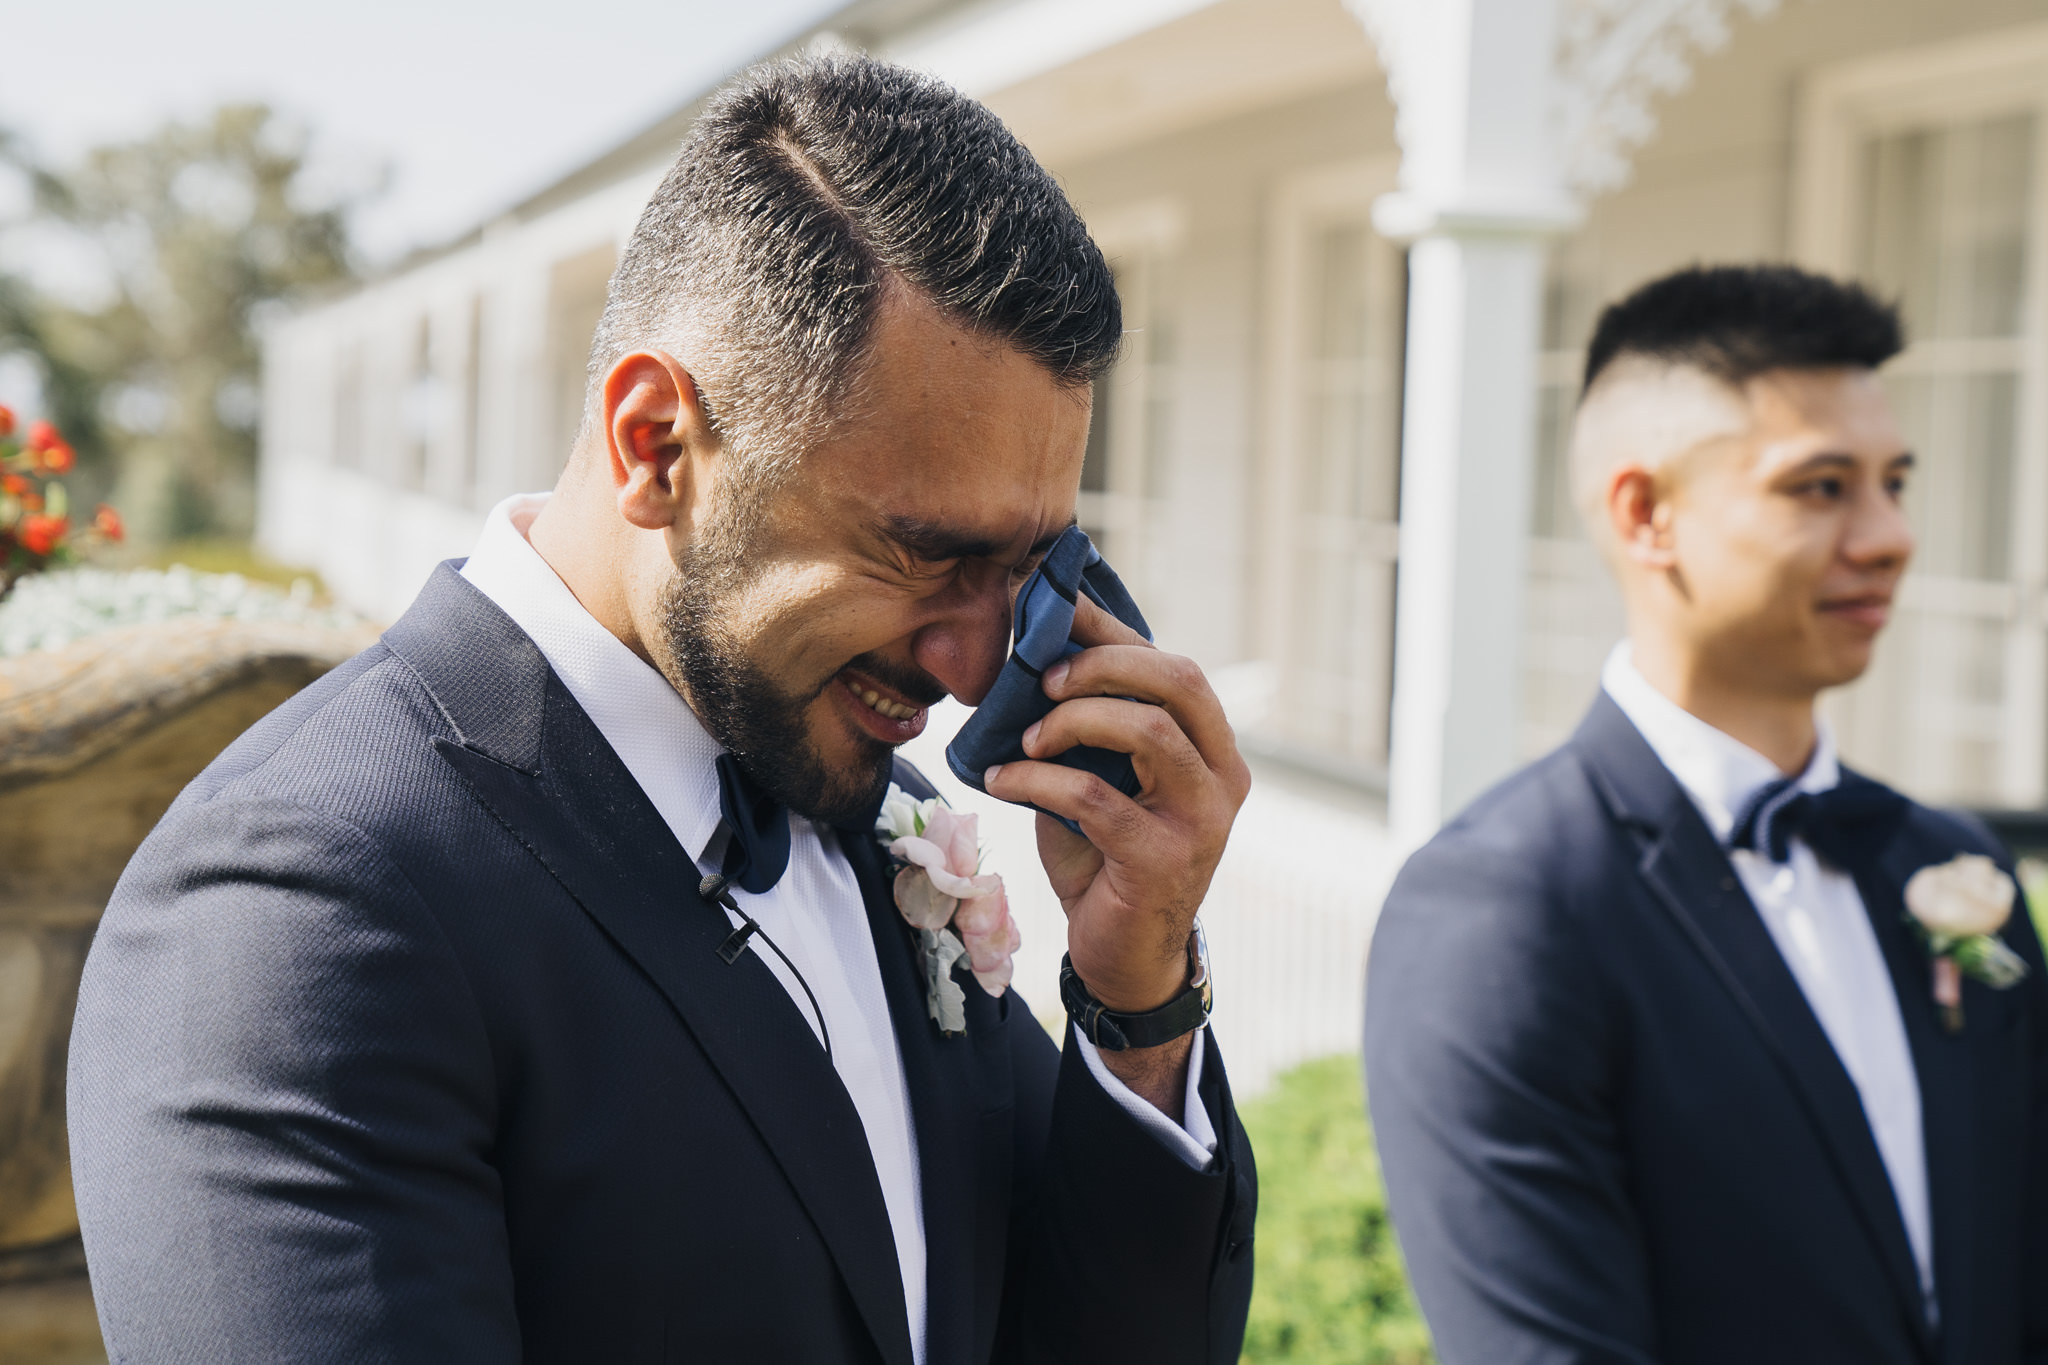 groom crying at his wedding